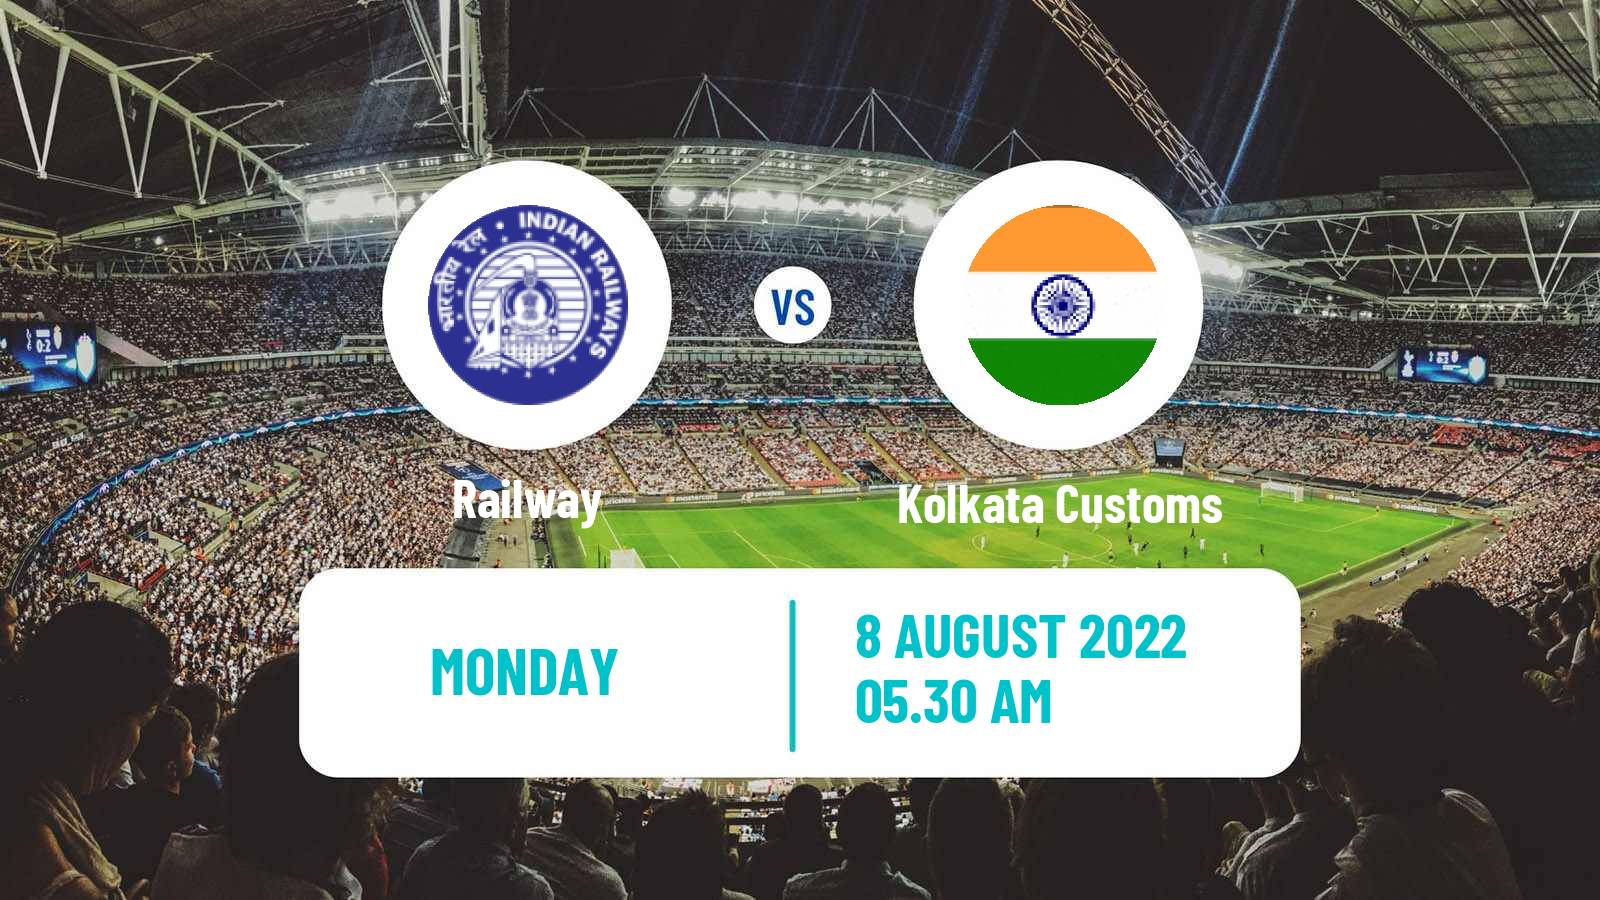 Soccer Indian Premier Division A Railway - Kolkata Customs